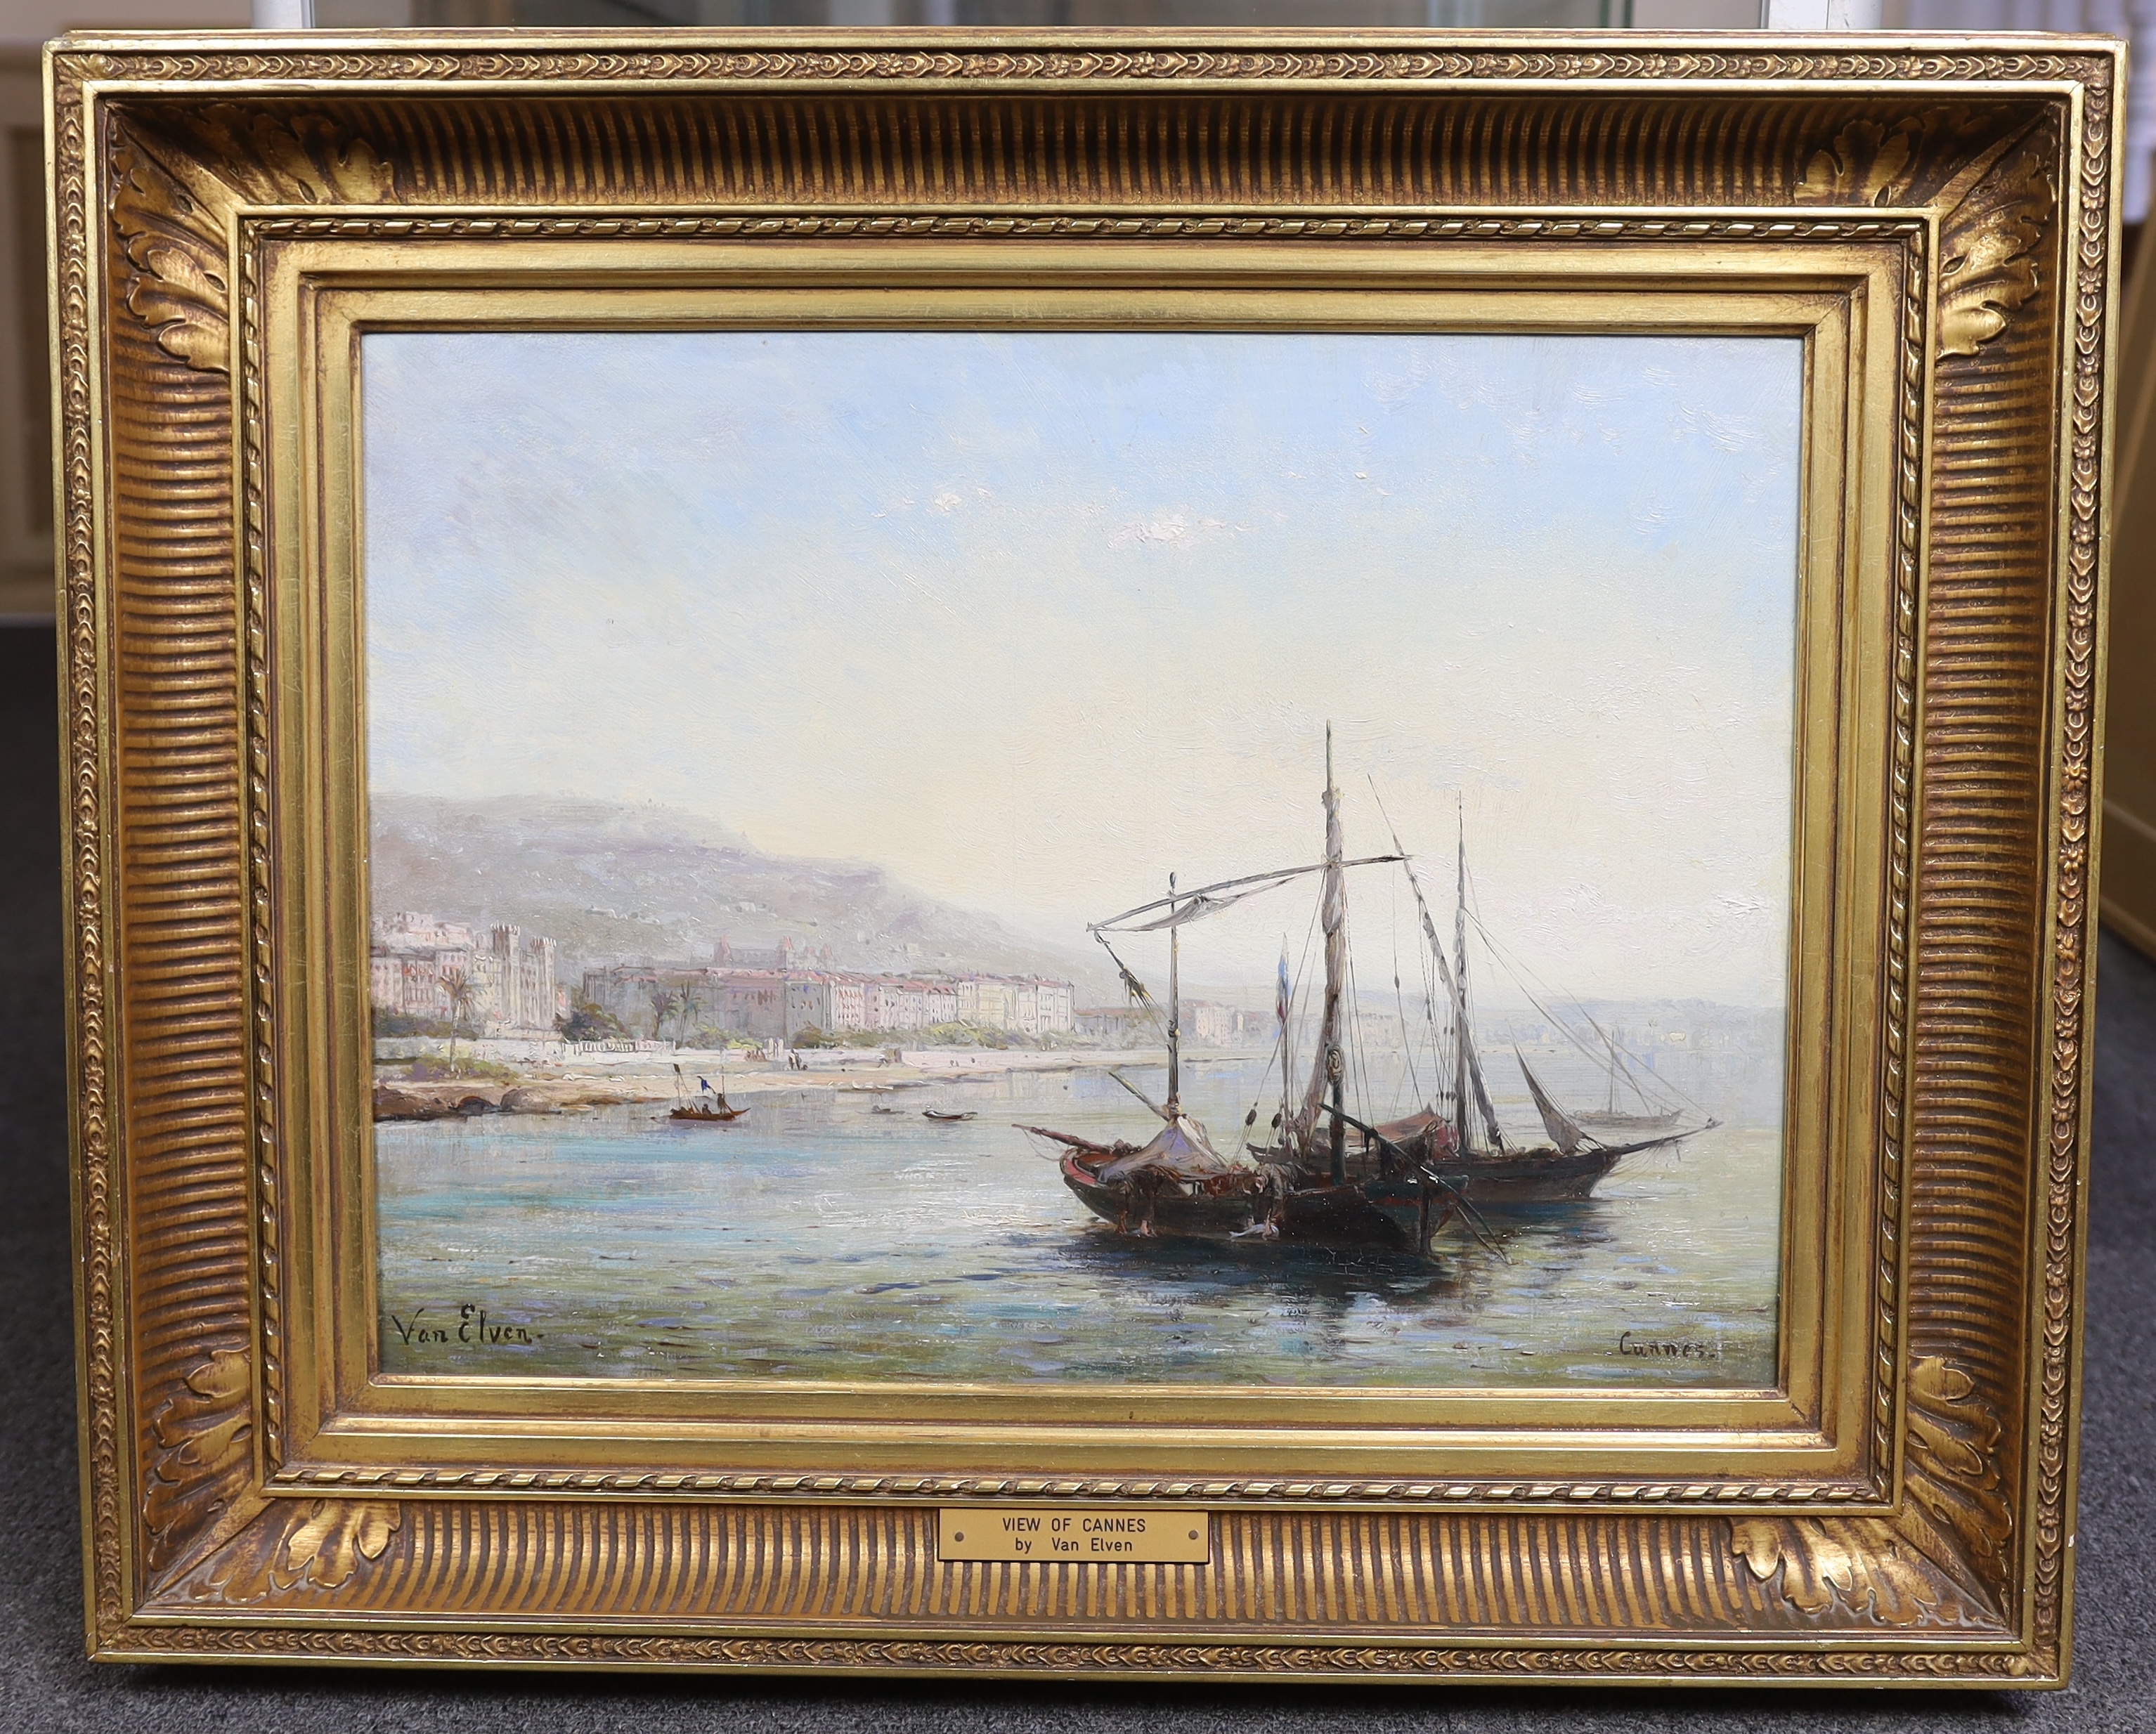 Pierre Henri Théodore Tetar Van Elven (Dutch/French, 1828-1908), View of Cannes, oil on canvas, 39 x 52cm